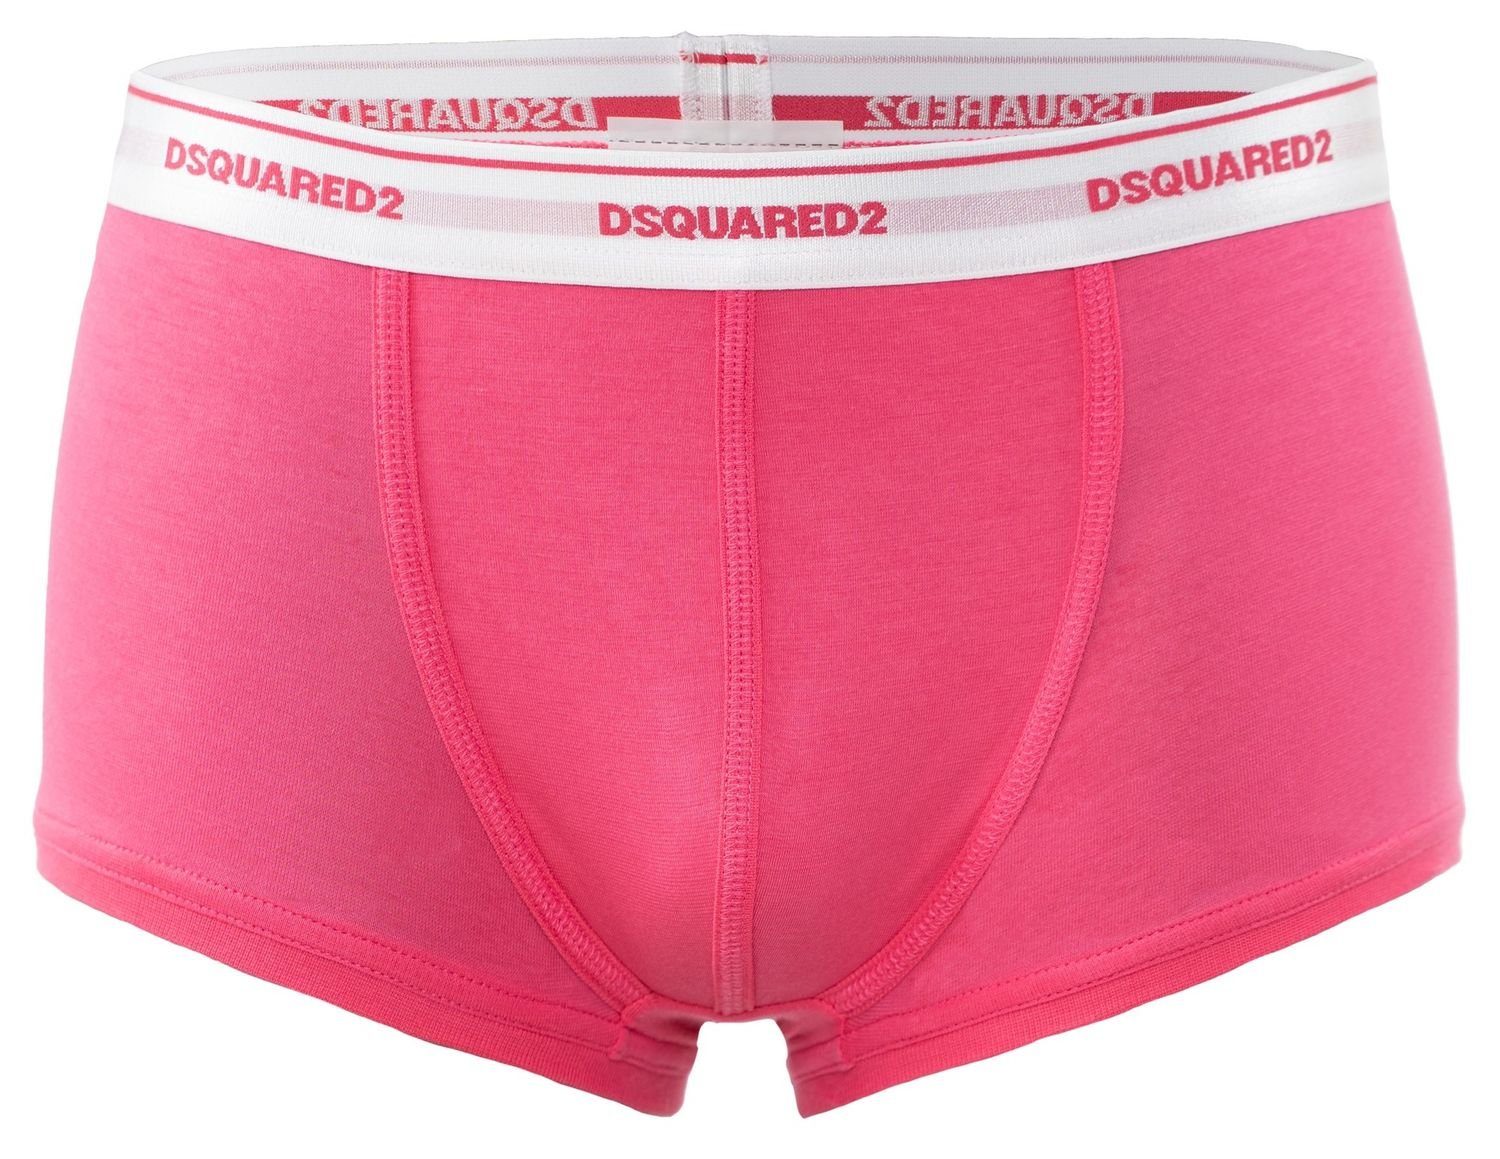 Dsquared2 Trunk Dsquared2 Boxershorts / Pants / Shorts / Boxer in pink Größe S / M / L / XL / XXL (1-St)